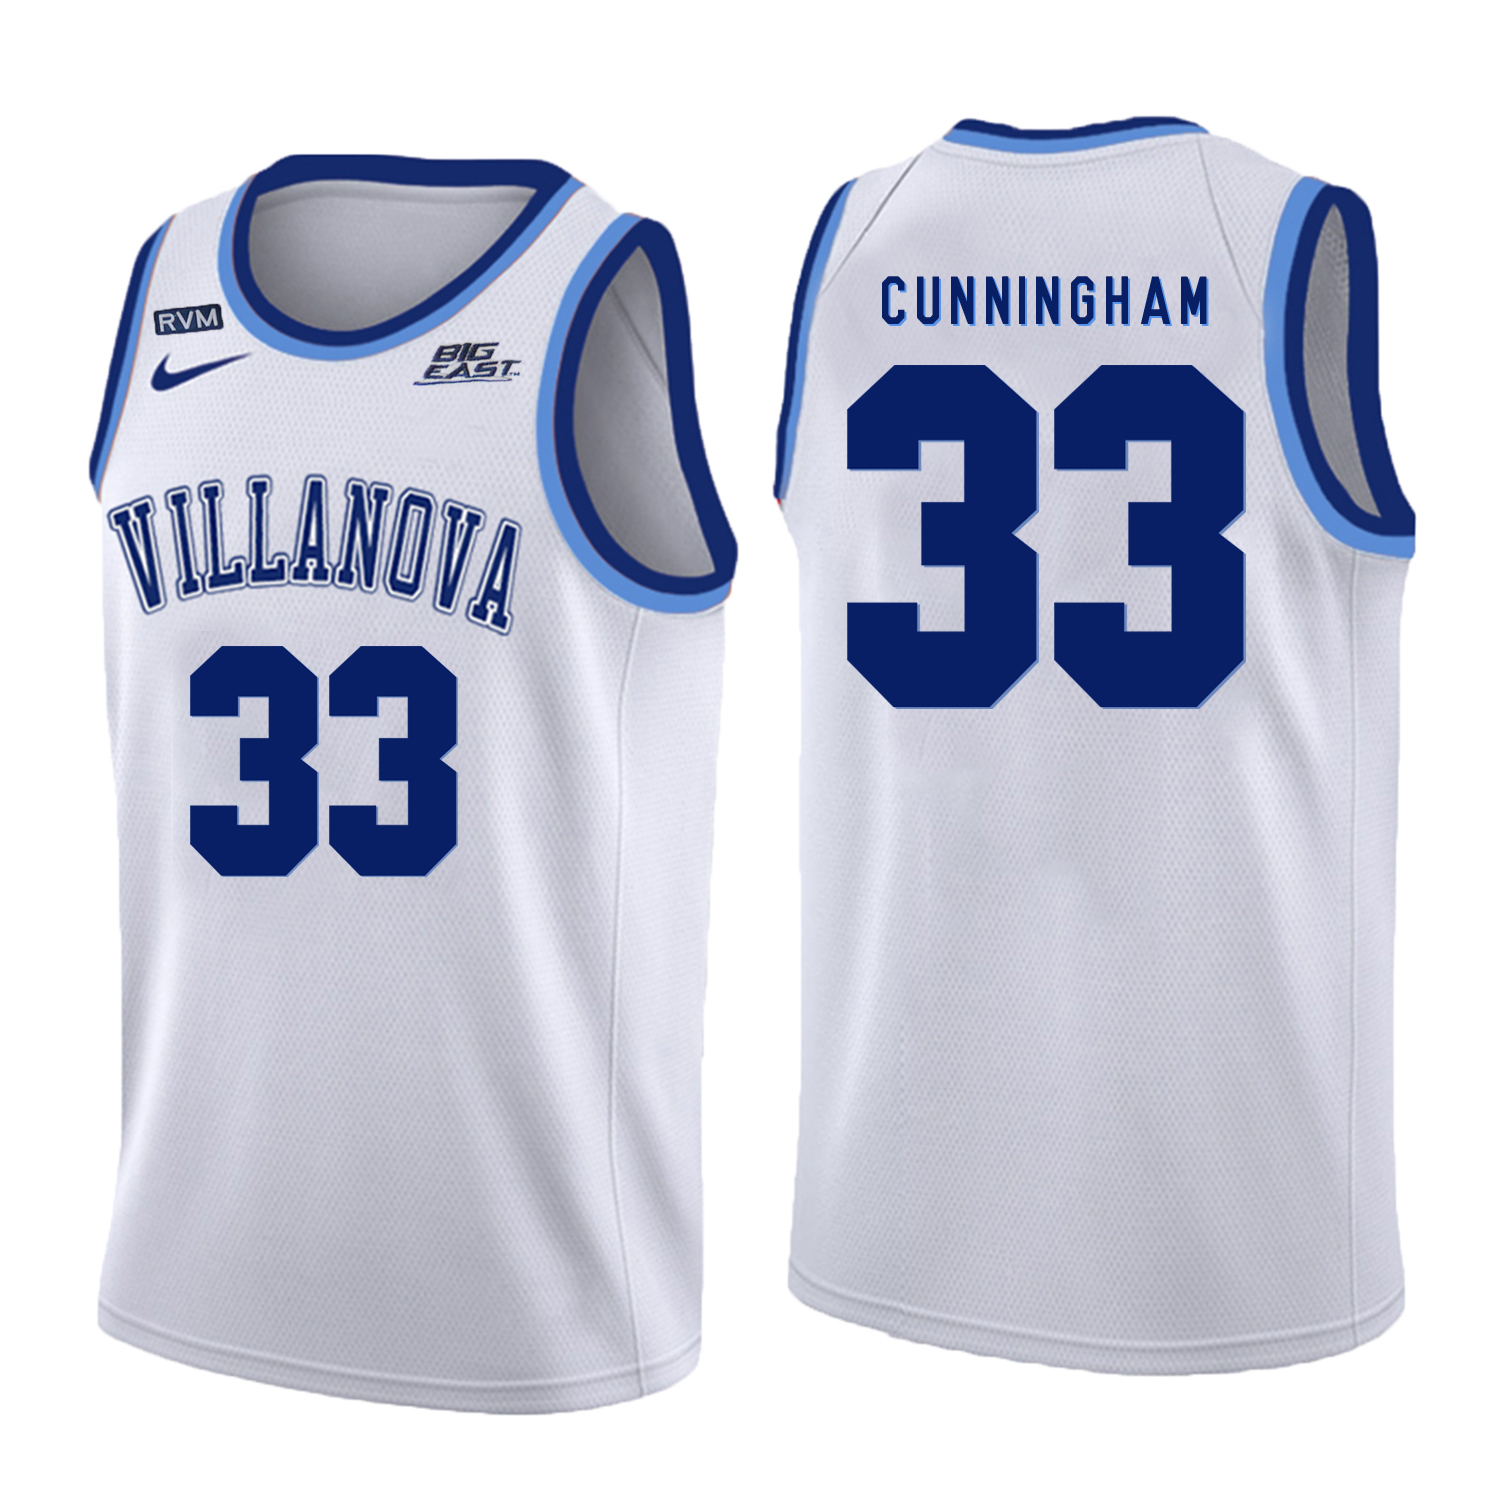 Villanova Wildcats 33 Dante Cunningham White College Basketball Jersey